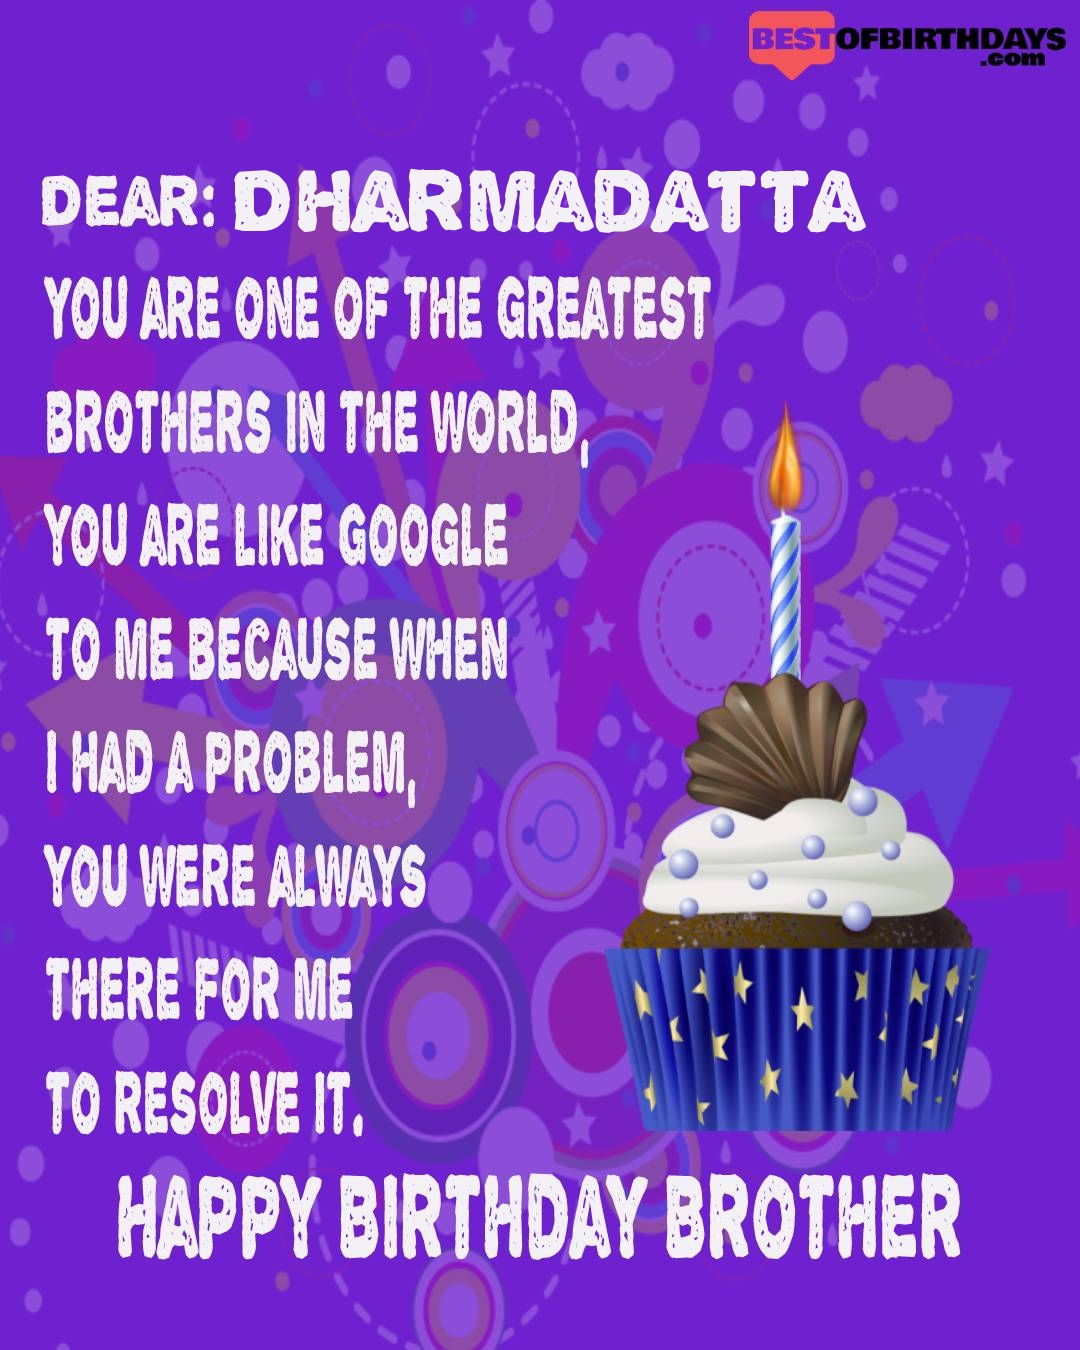 Happy birthday dharmadatta bhai brother bro